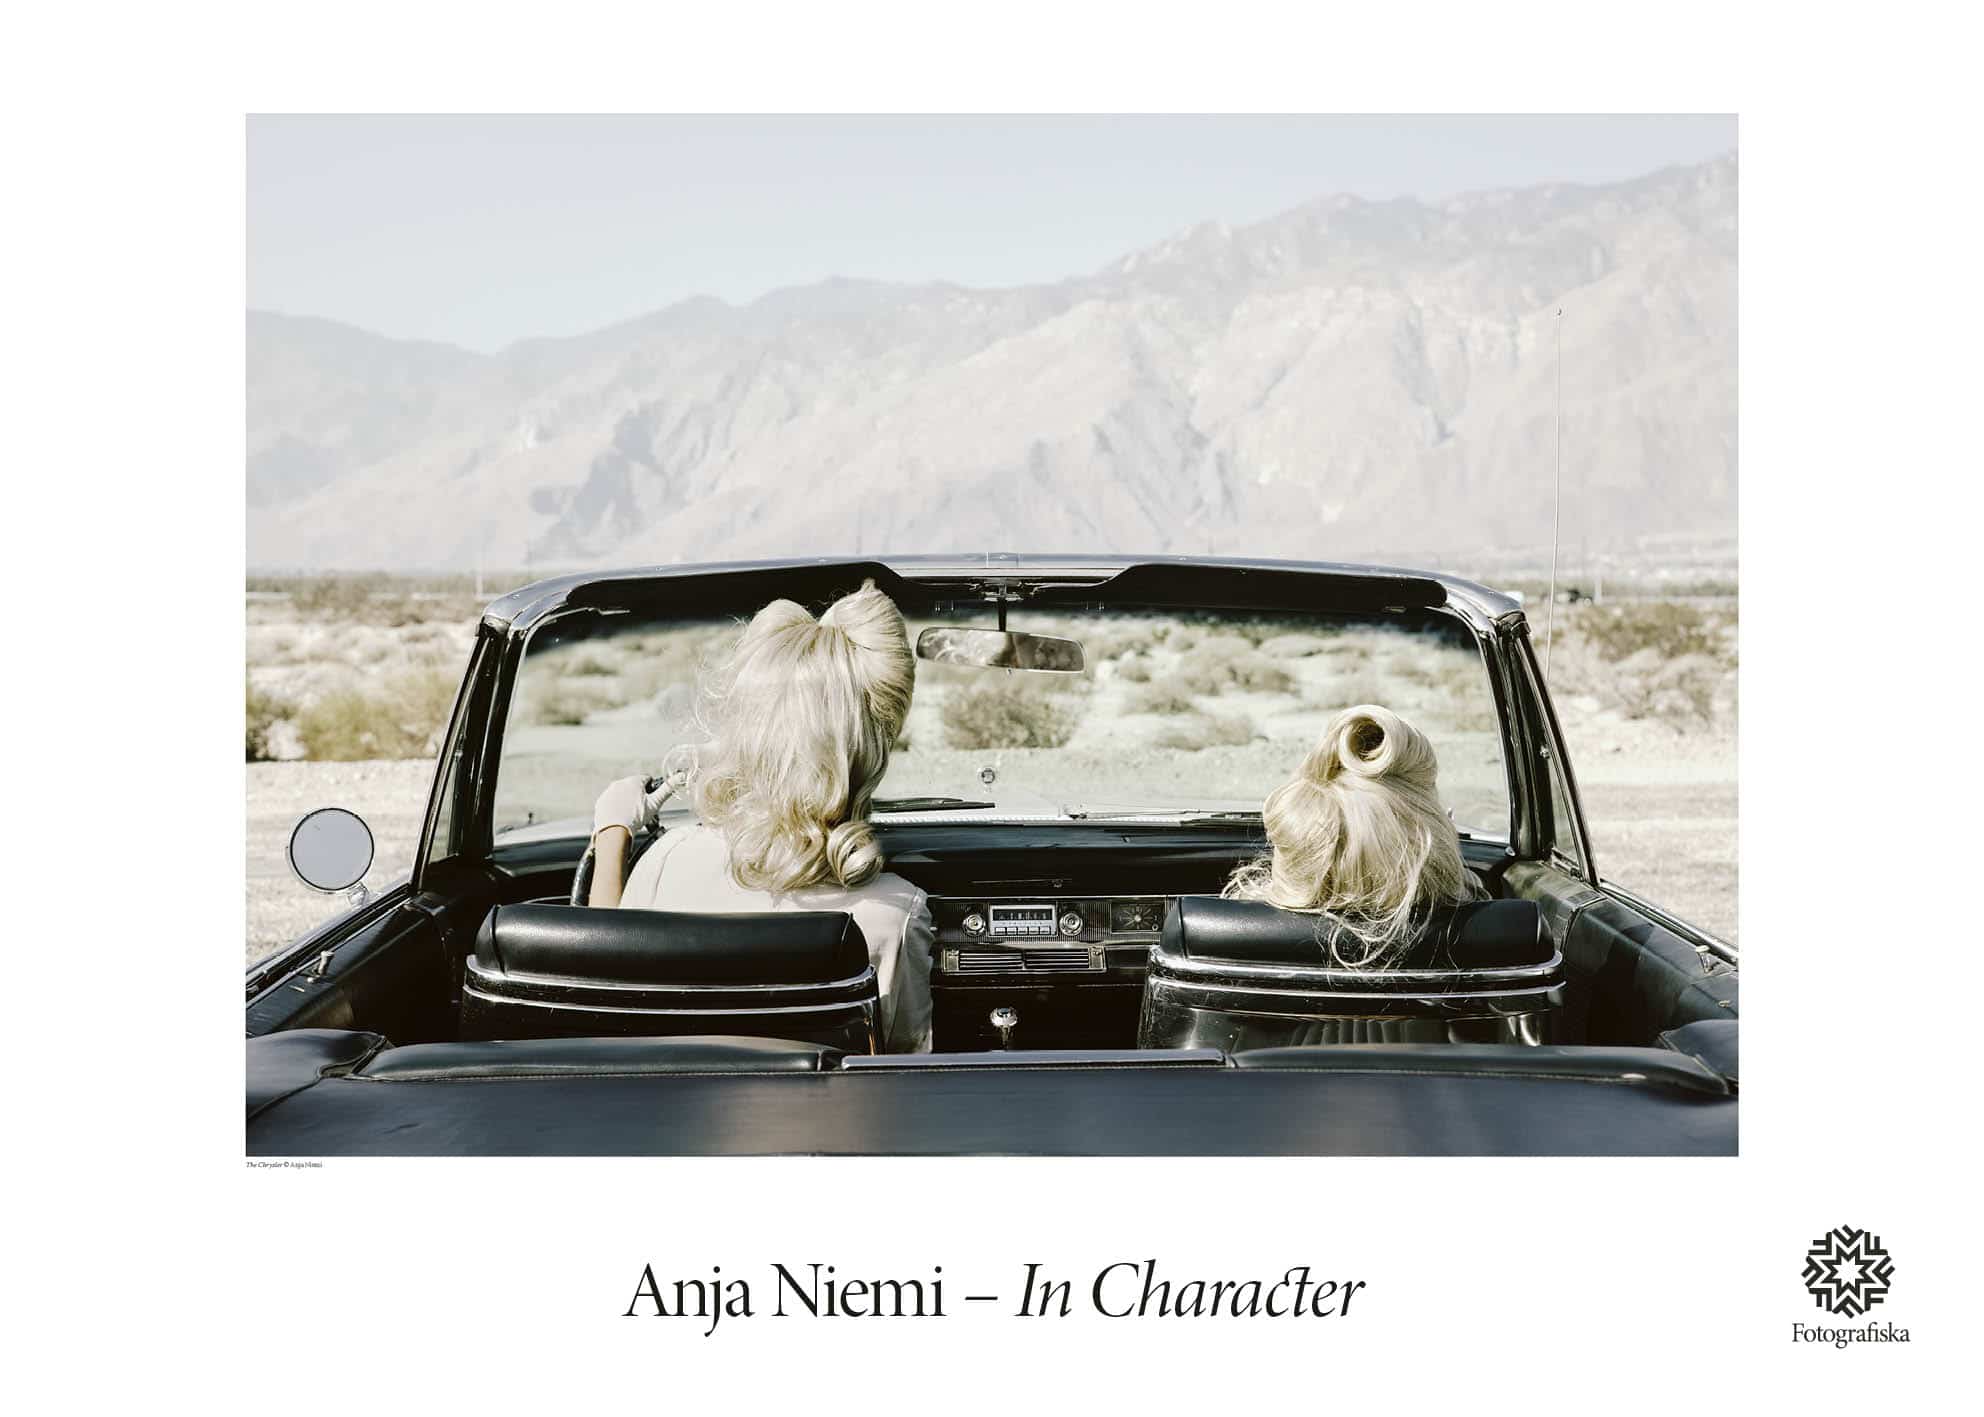 Anja Niemi, The Chrysler #5177